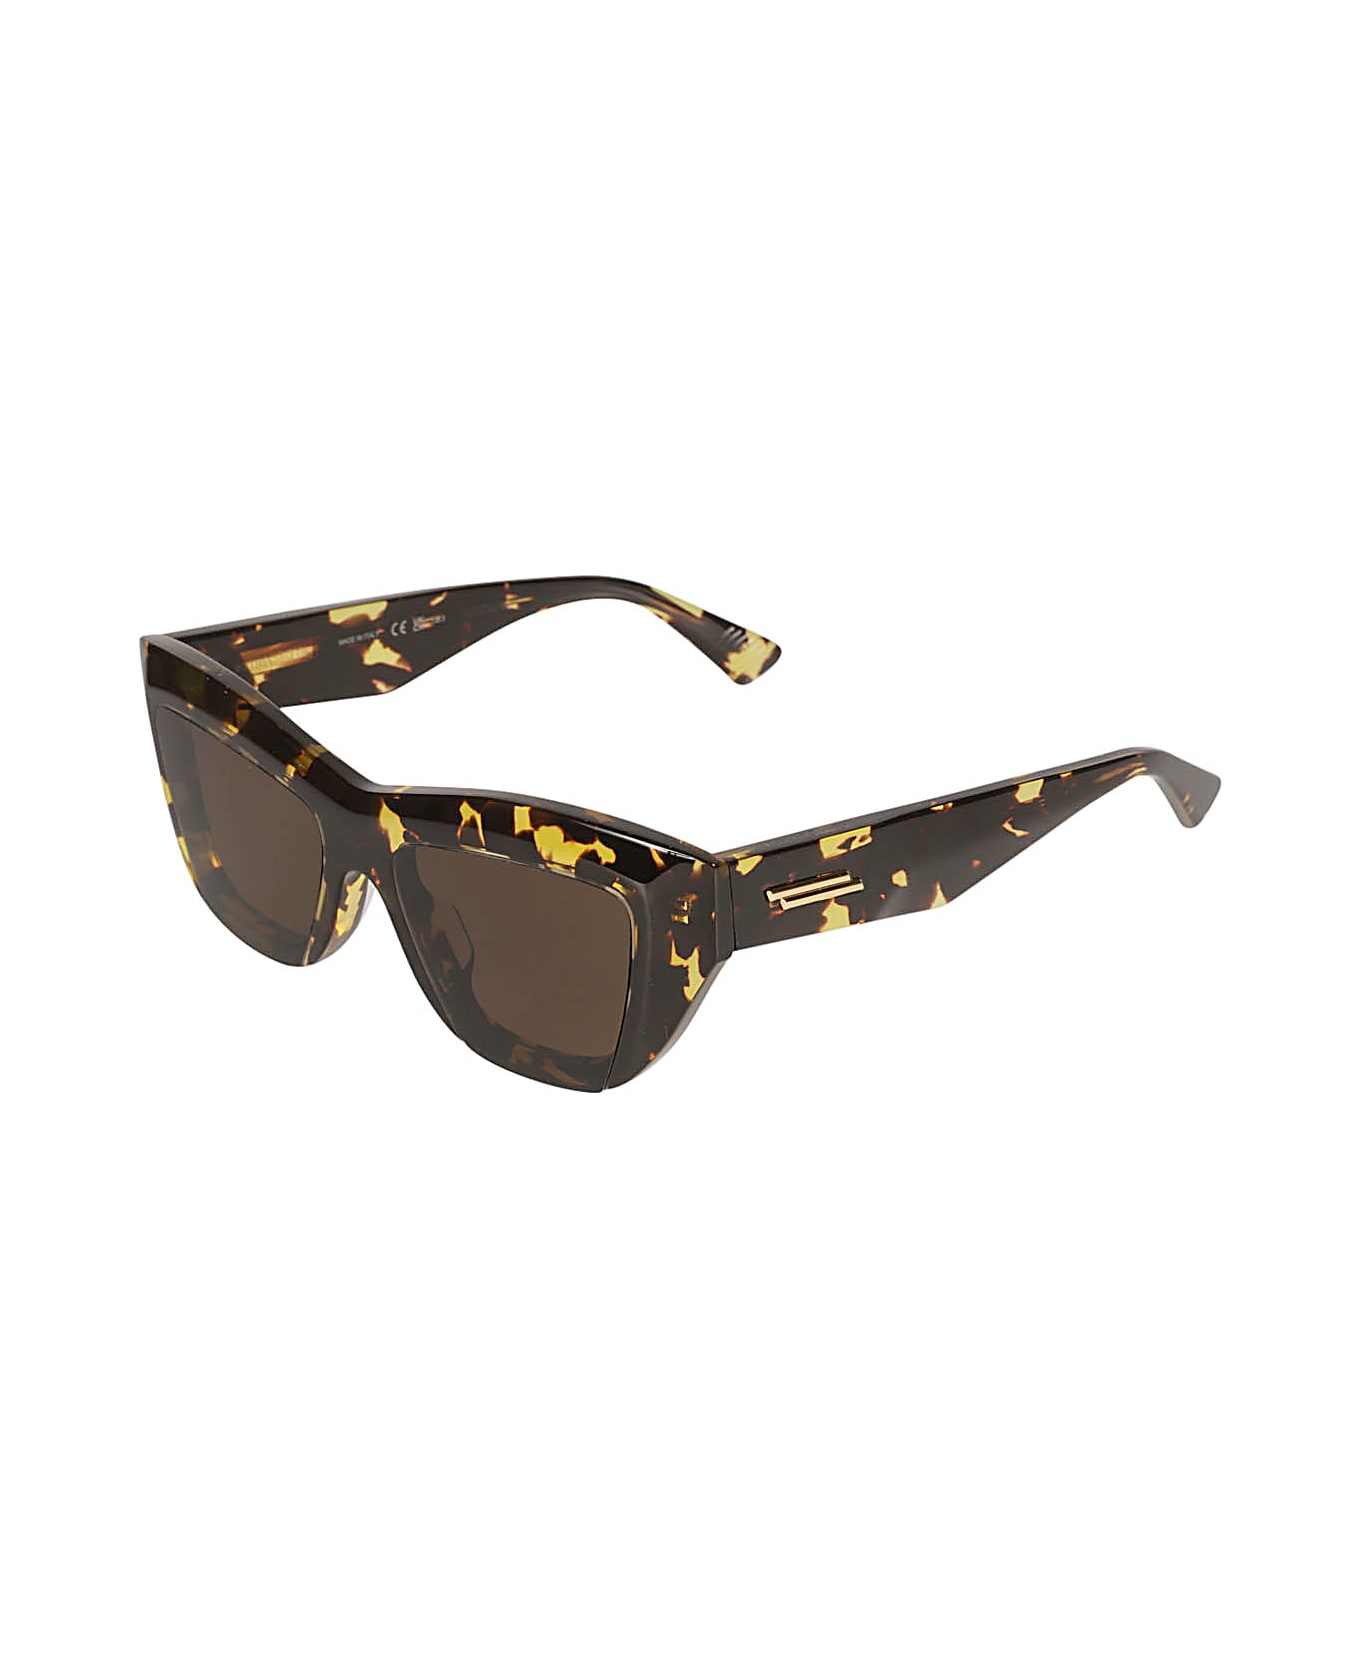 Bottega Veneta Eyewear Square Frame Flame Effect Sunglasses - Havana/Brown